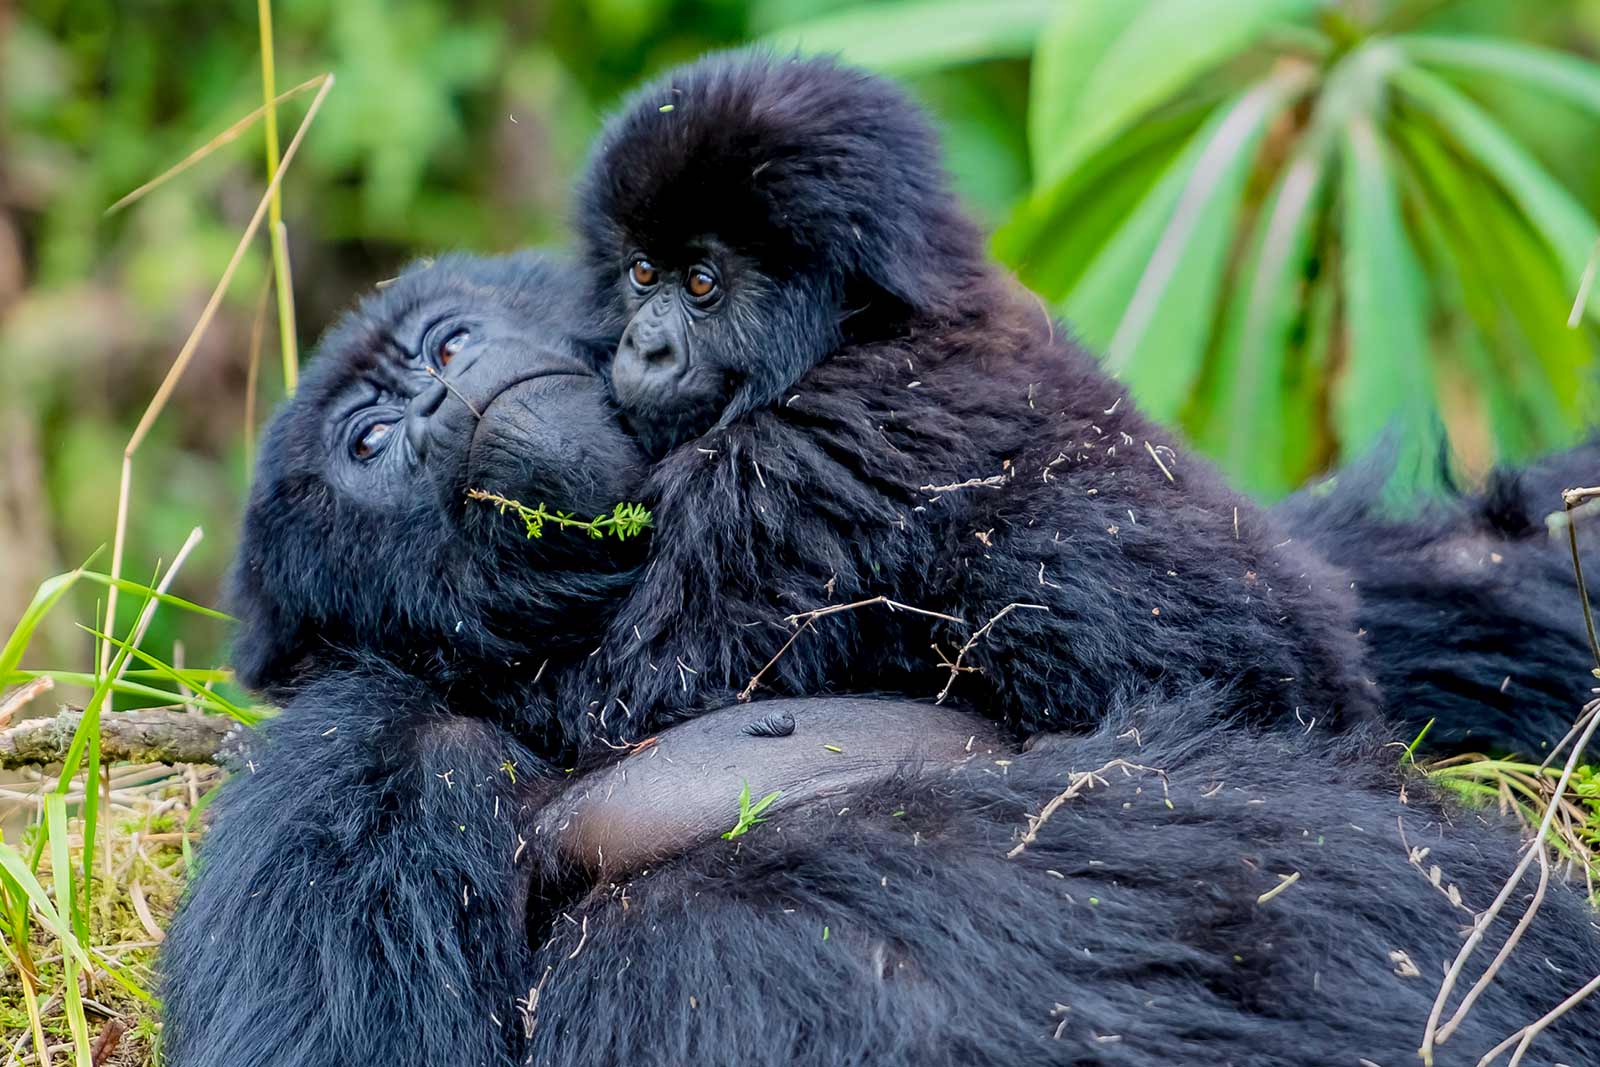 A guide to gorilla trekking in Rwanda